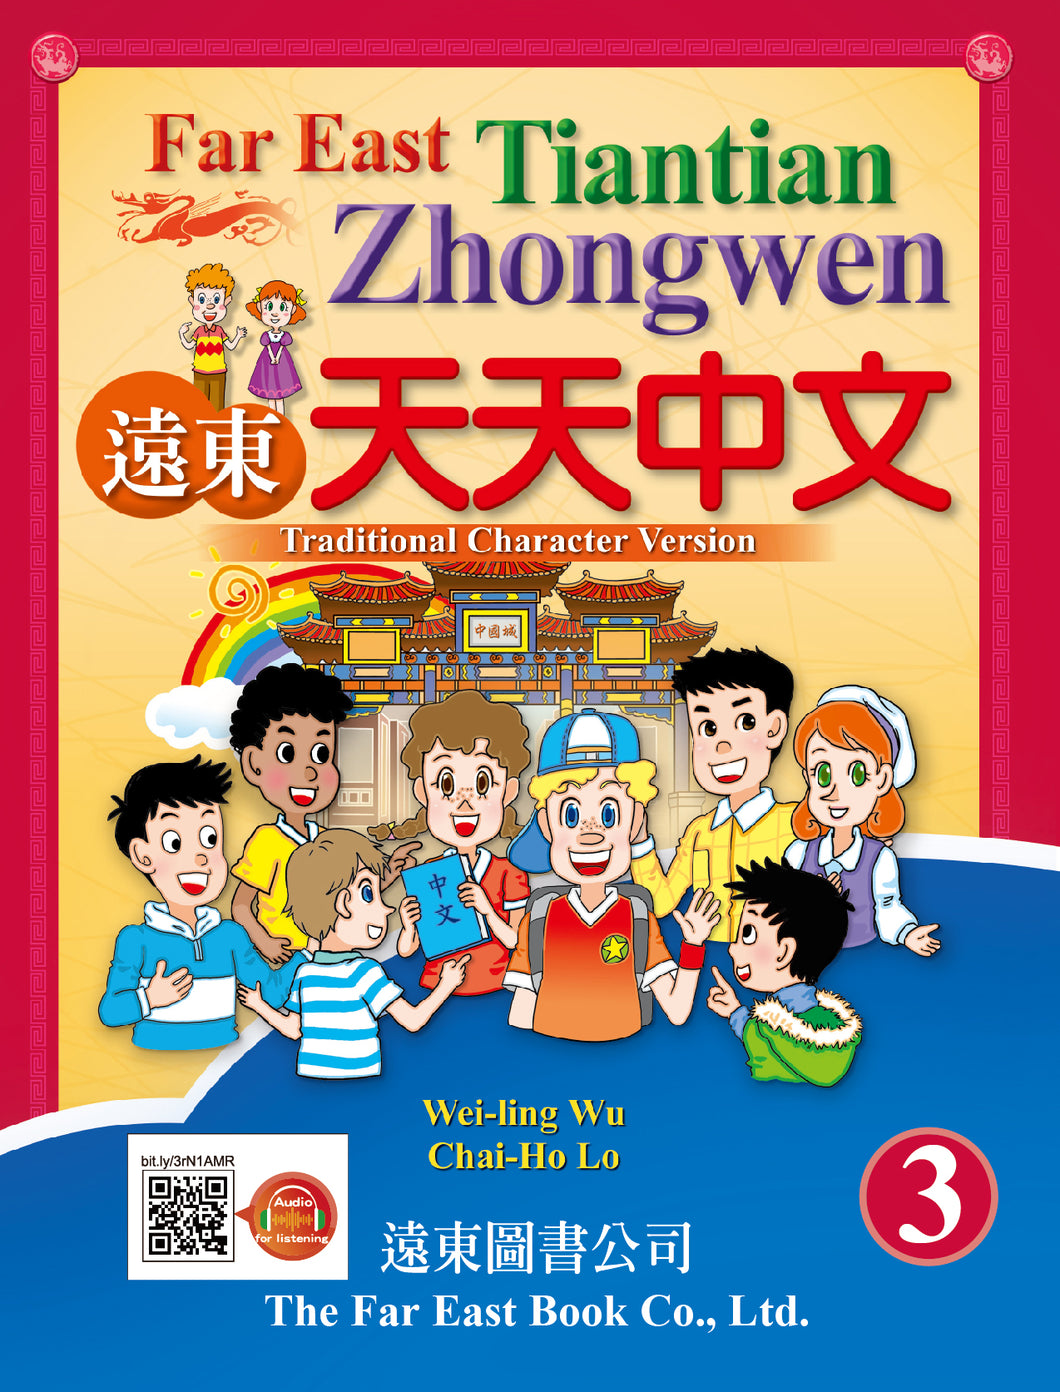 Far East Tiantian Zhongwen Level 3 (Traditional Character) Textbook (Audio for listening)
遠東生活華語 (第二冊) (課本 A.B 冊) (單色線上音檔版)